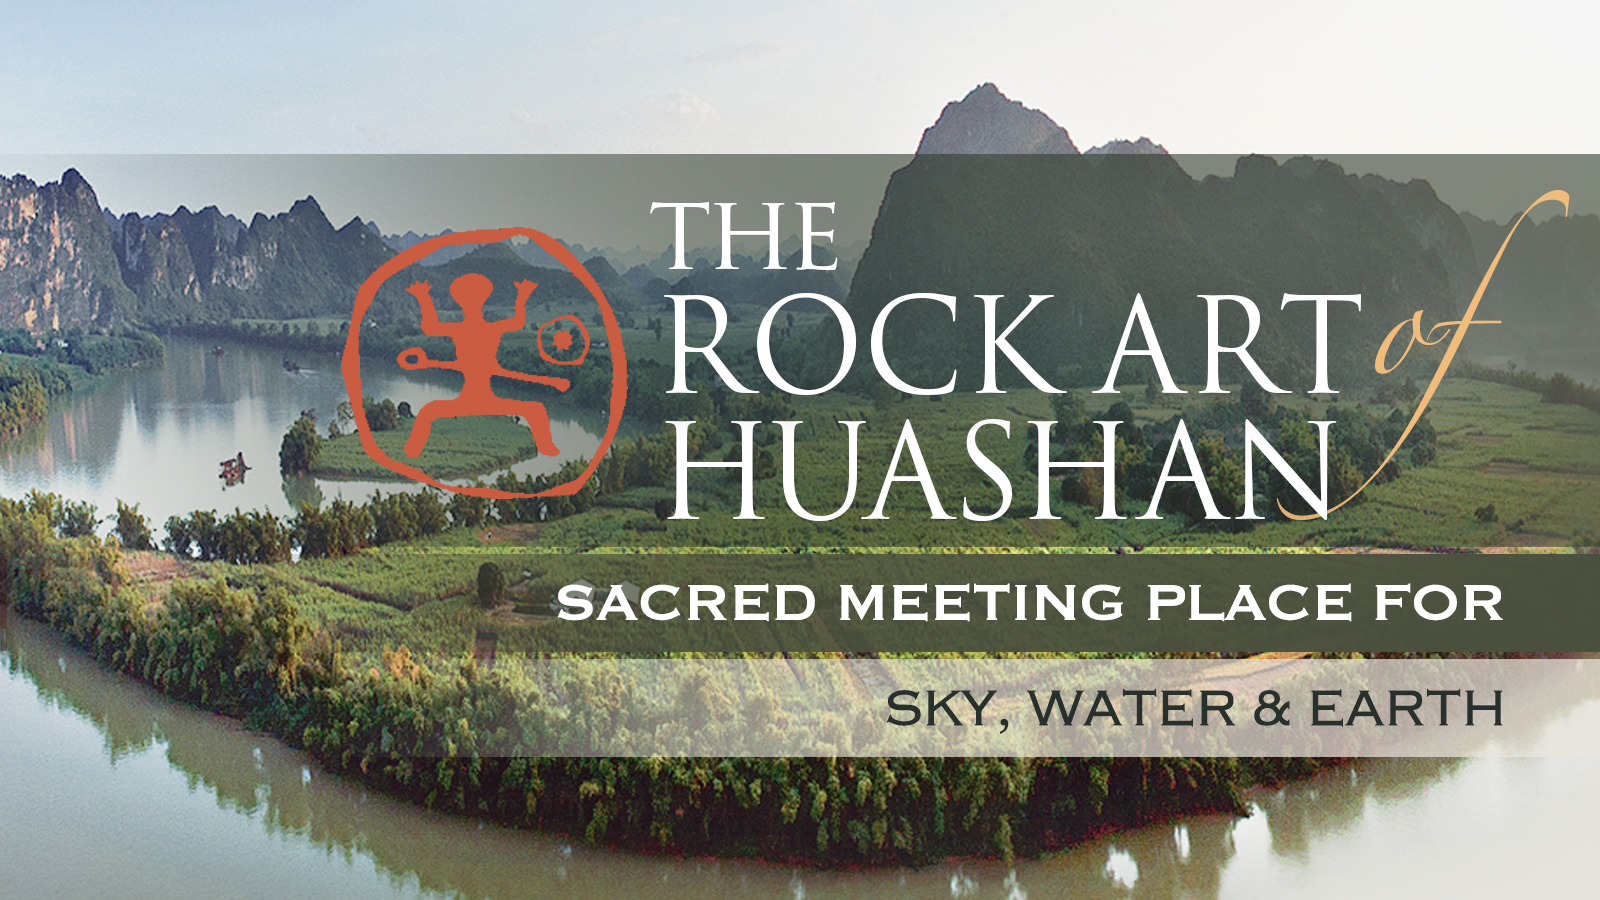 The 38 Rock Art Sites of the Zuojiang Huashan Rock Art Cultural Landscape